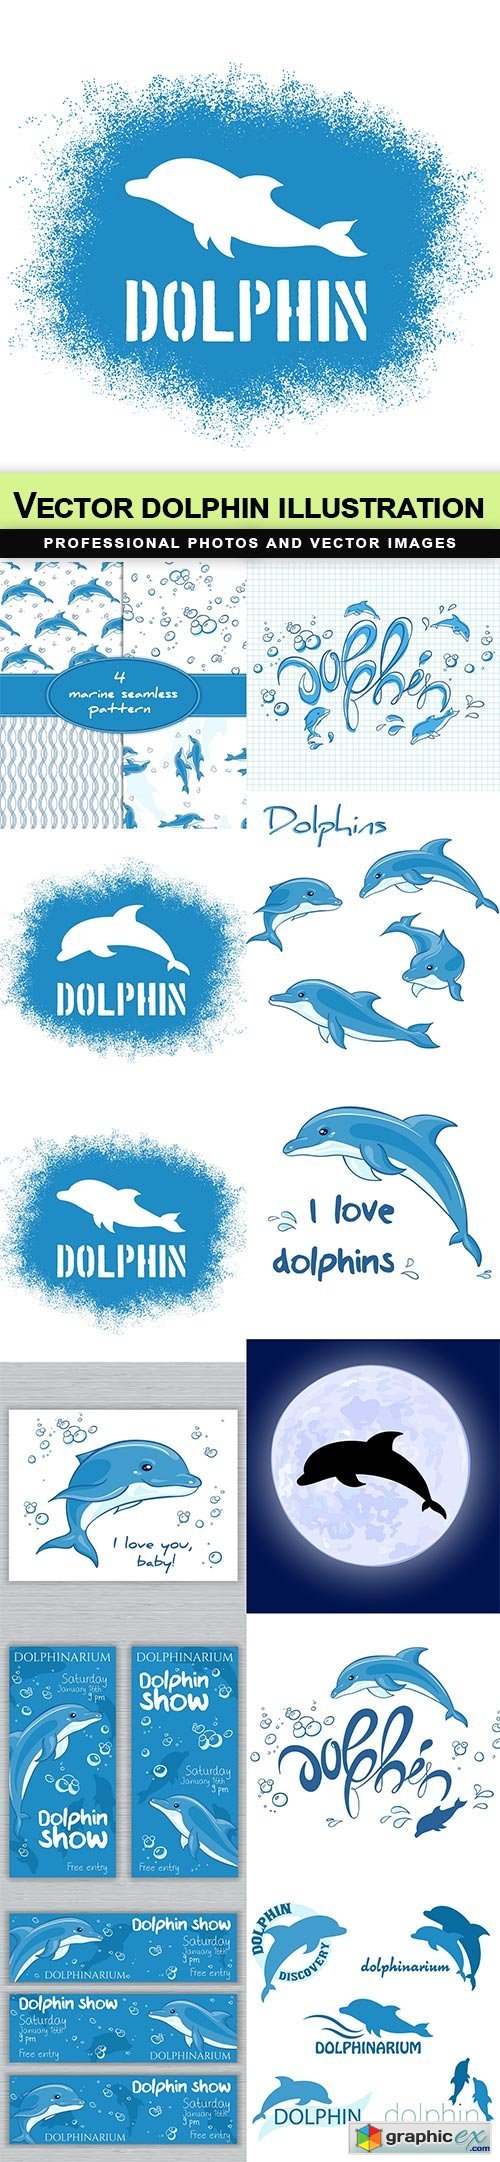 Vector dolphin illustration